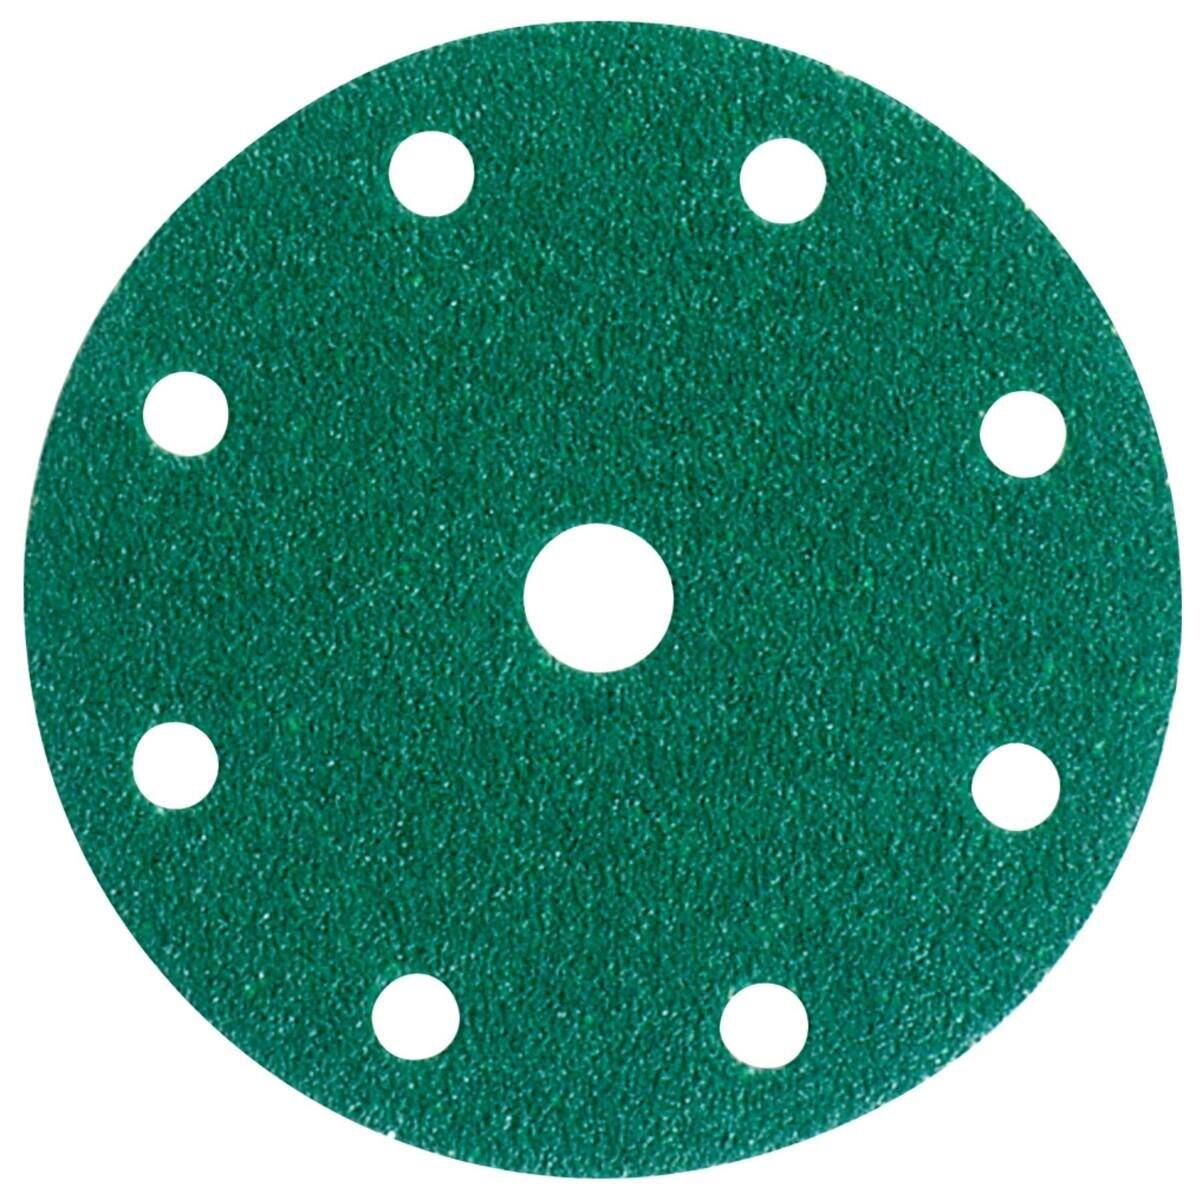 3M Hookit Green 245, 150 mm, P60, 9 holes